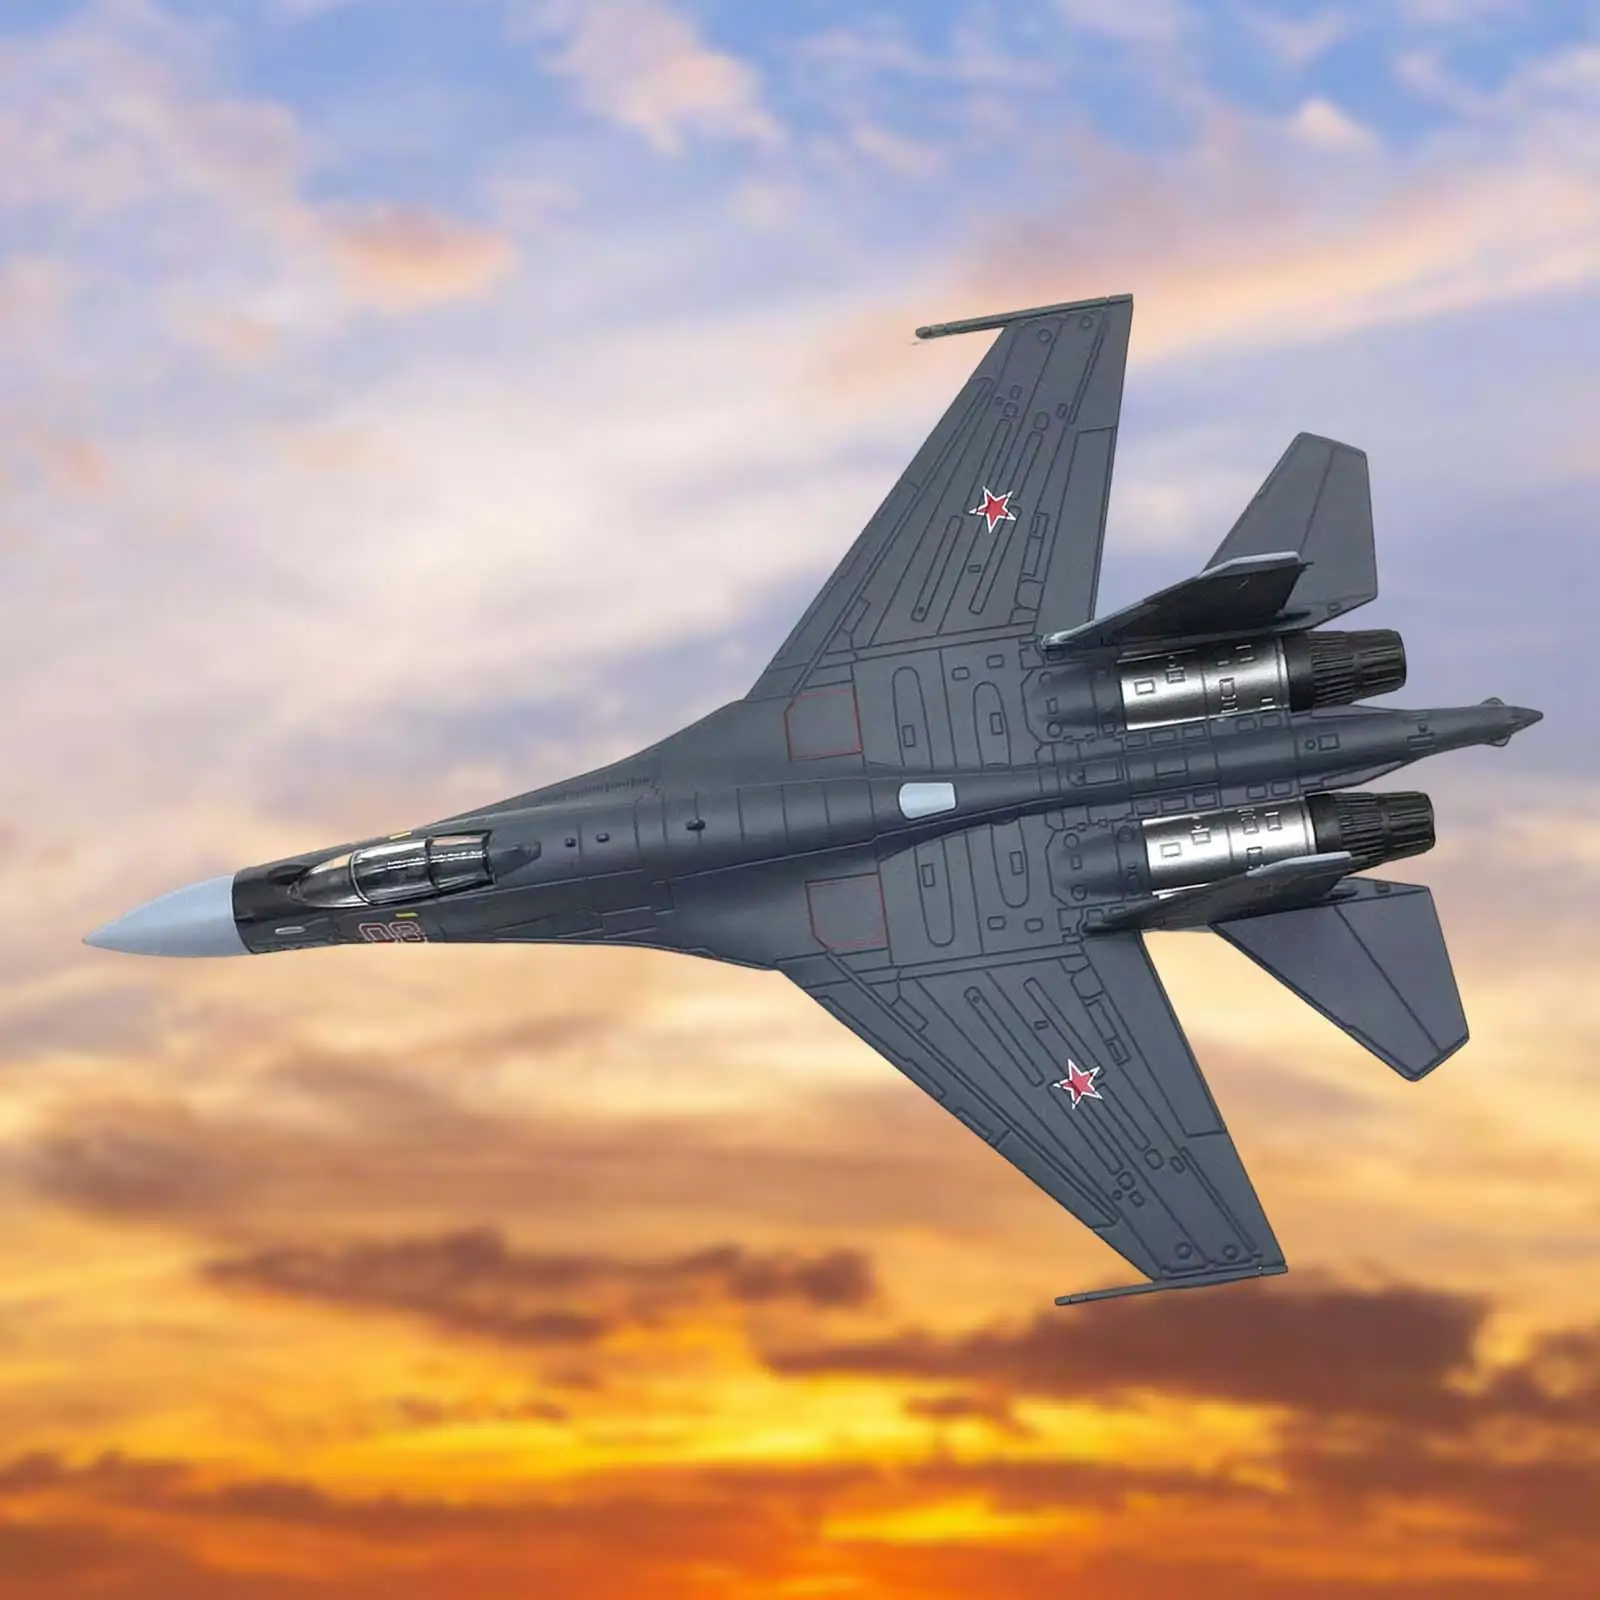 1/100 Russian Plane Model Collectables Ornaments Fighter Model for Desktop Souvenir